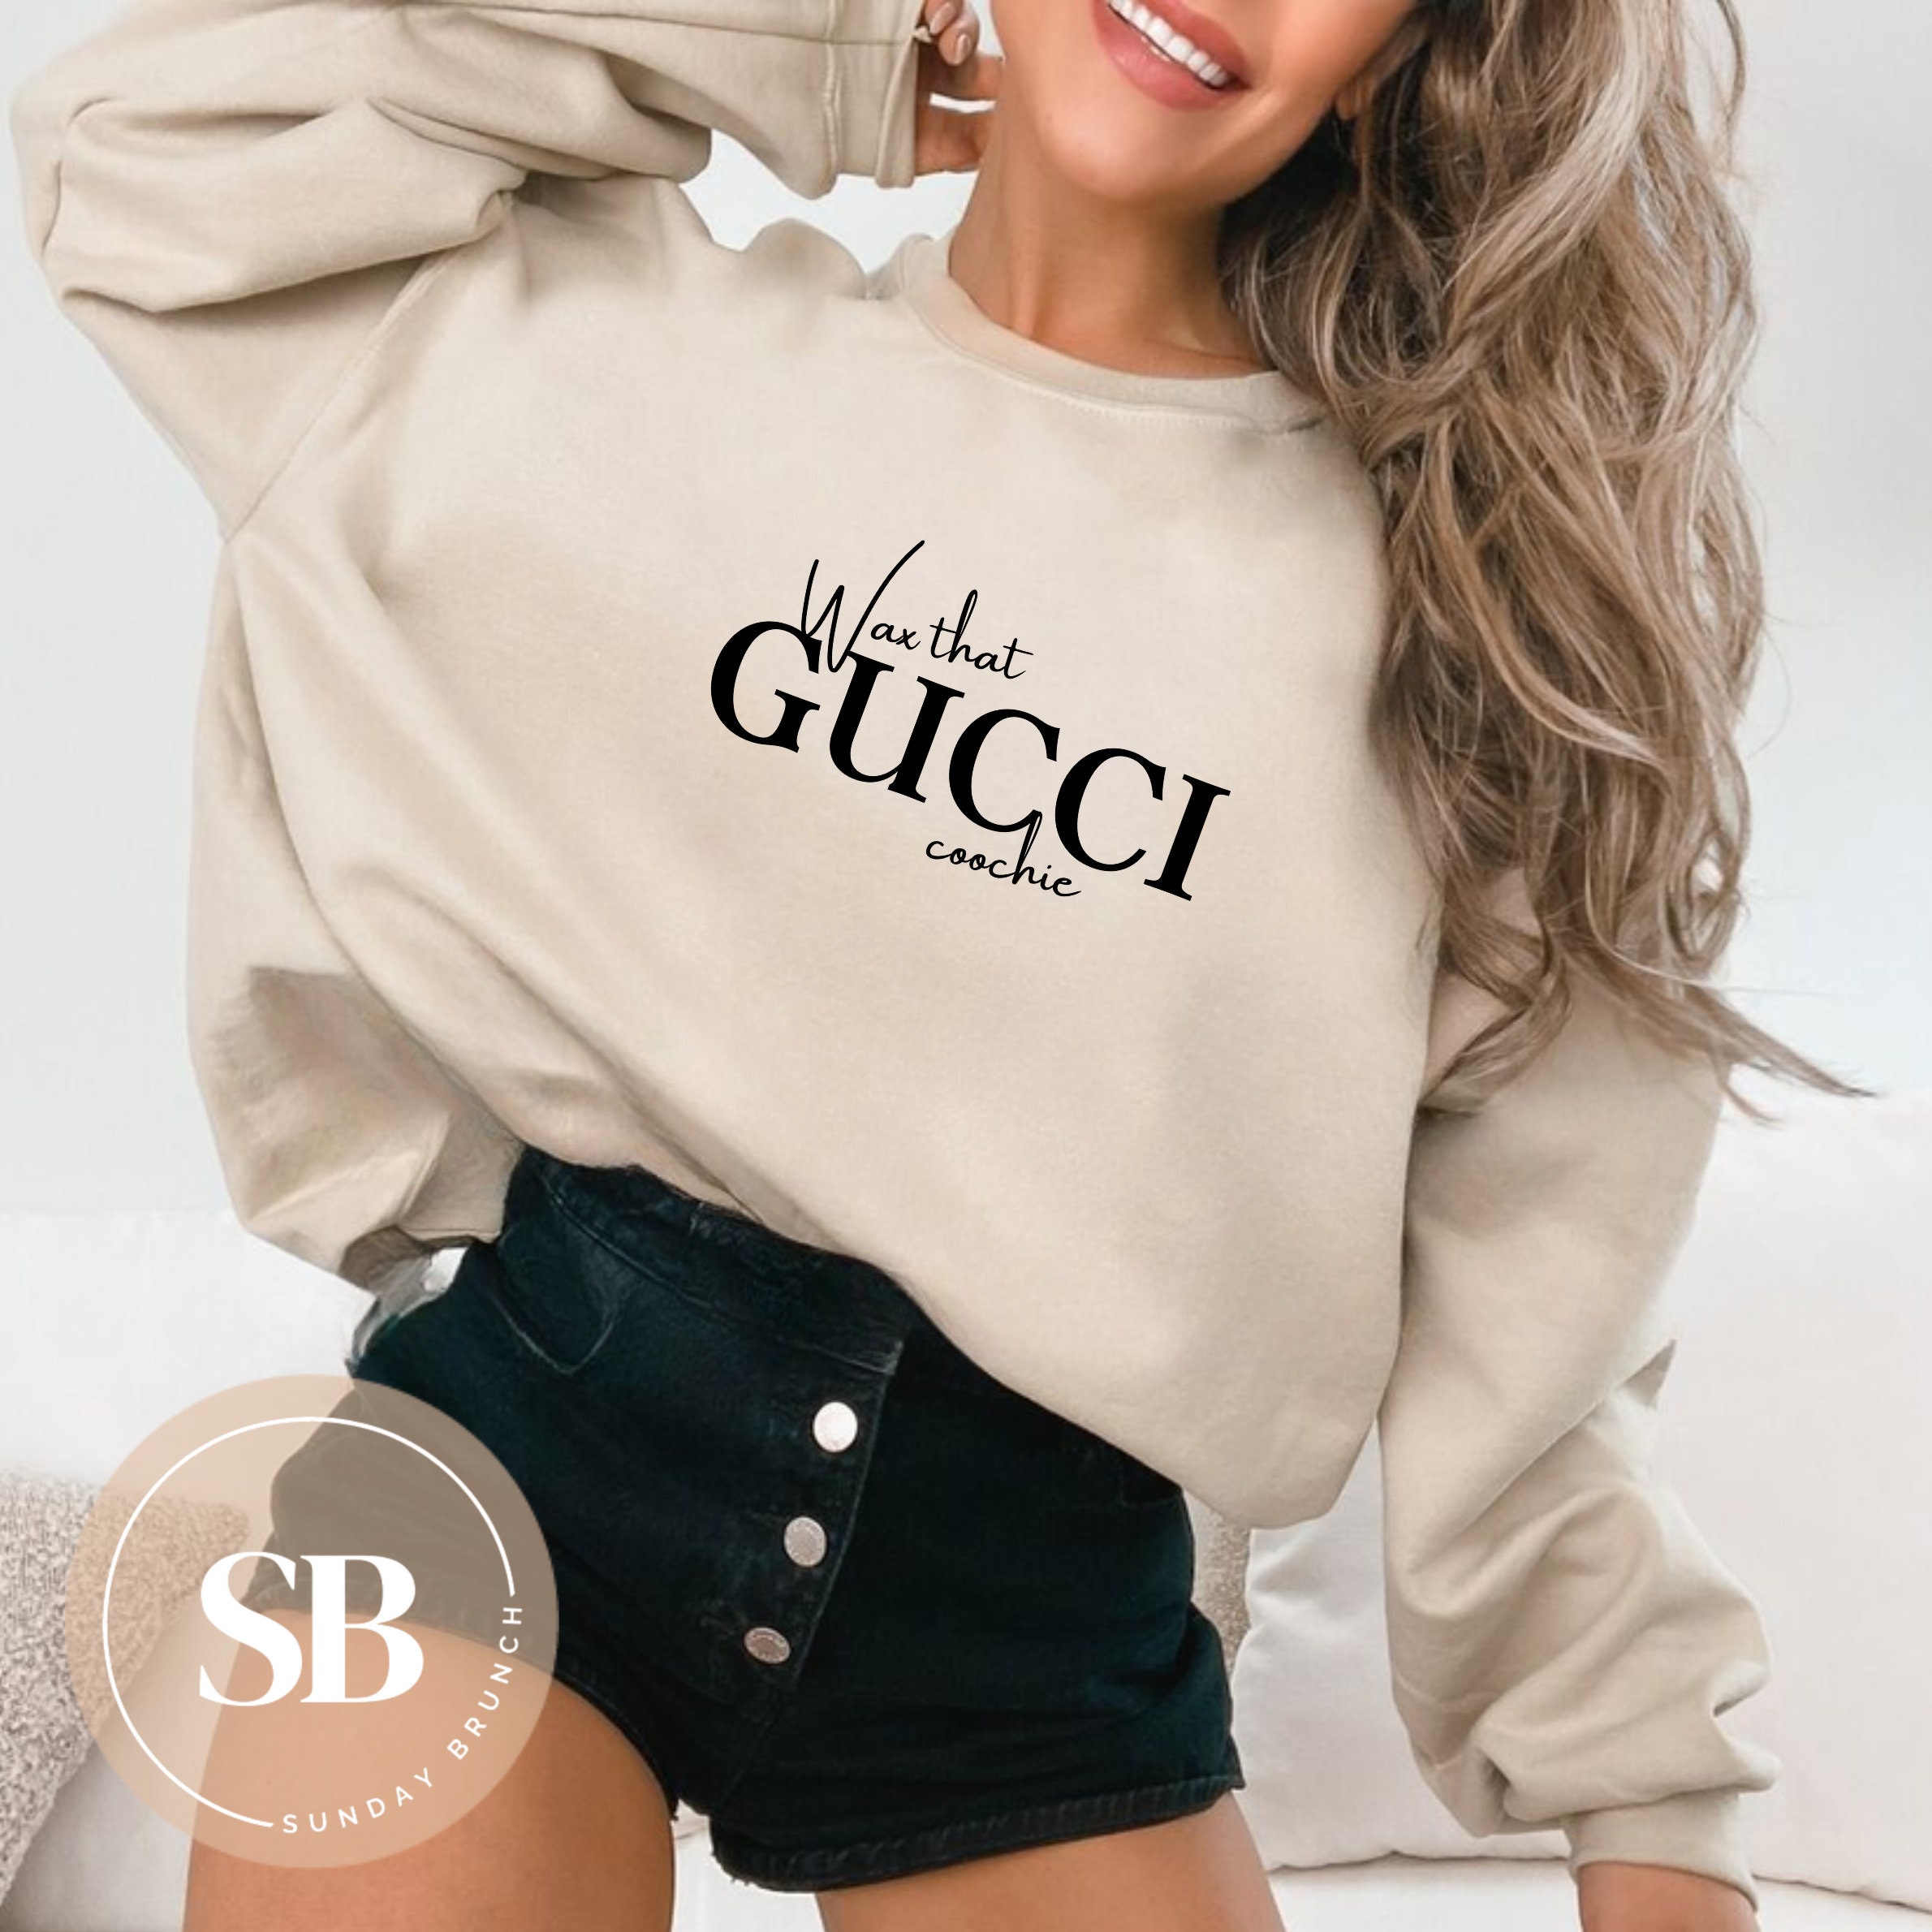 Gucci Women's Supergee Wool Crewneck Sweater